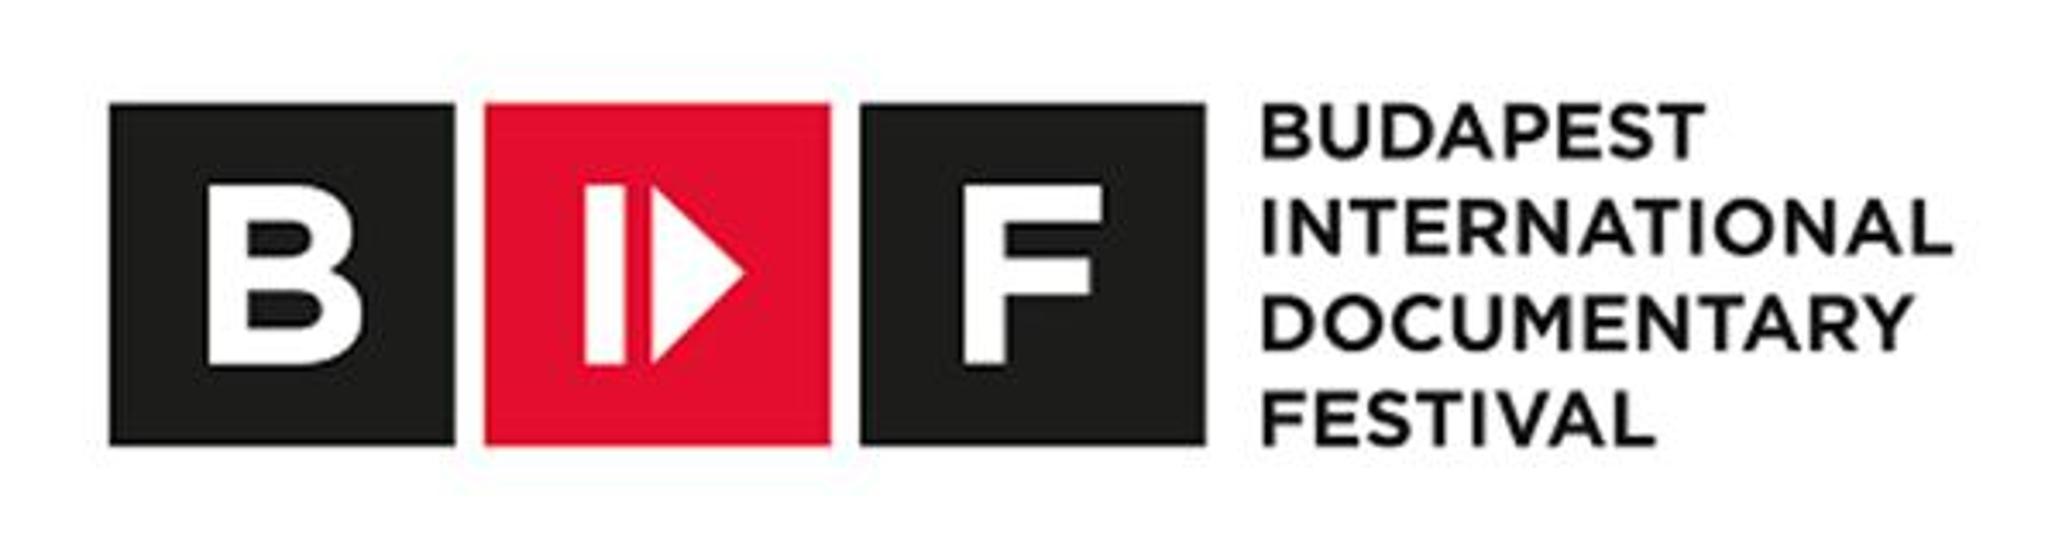 'Budapest International Documentary Festival', 24 – 28 January